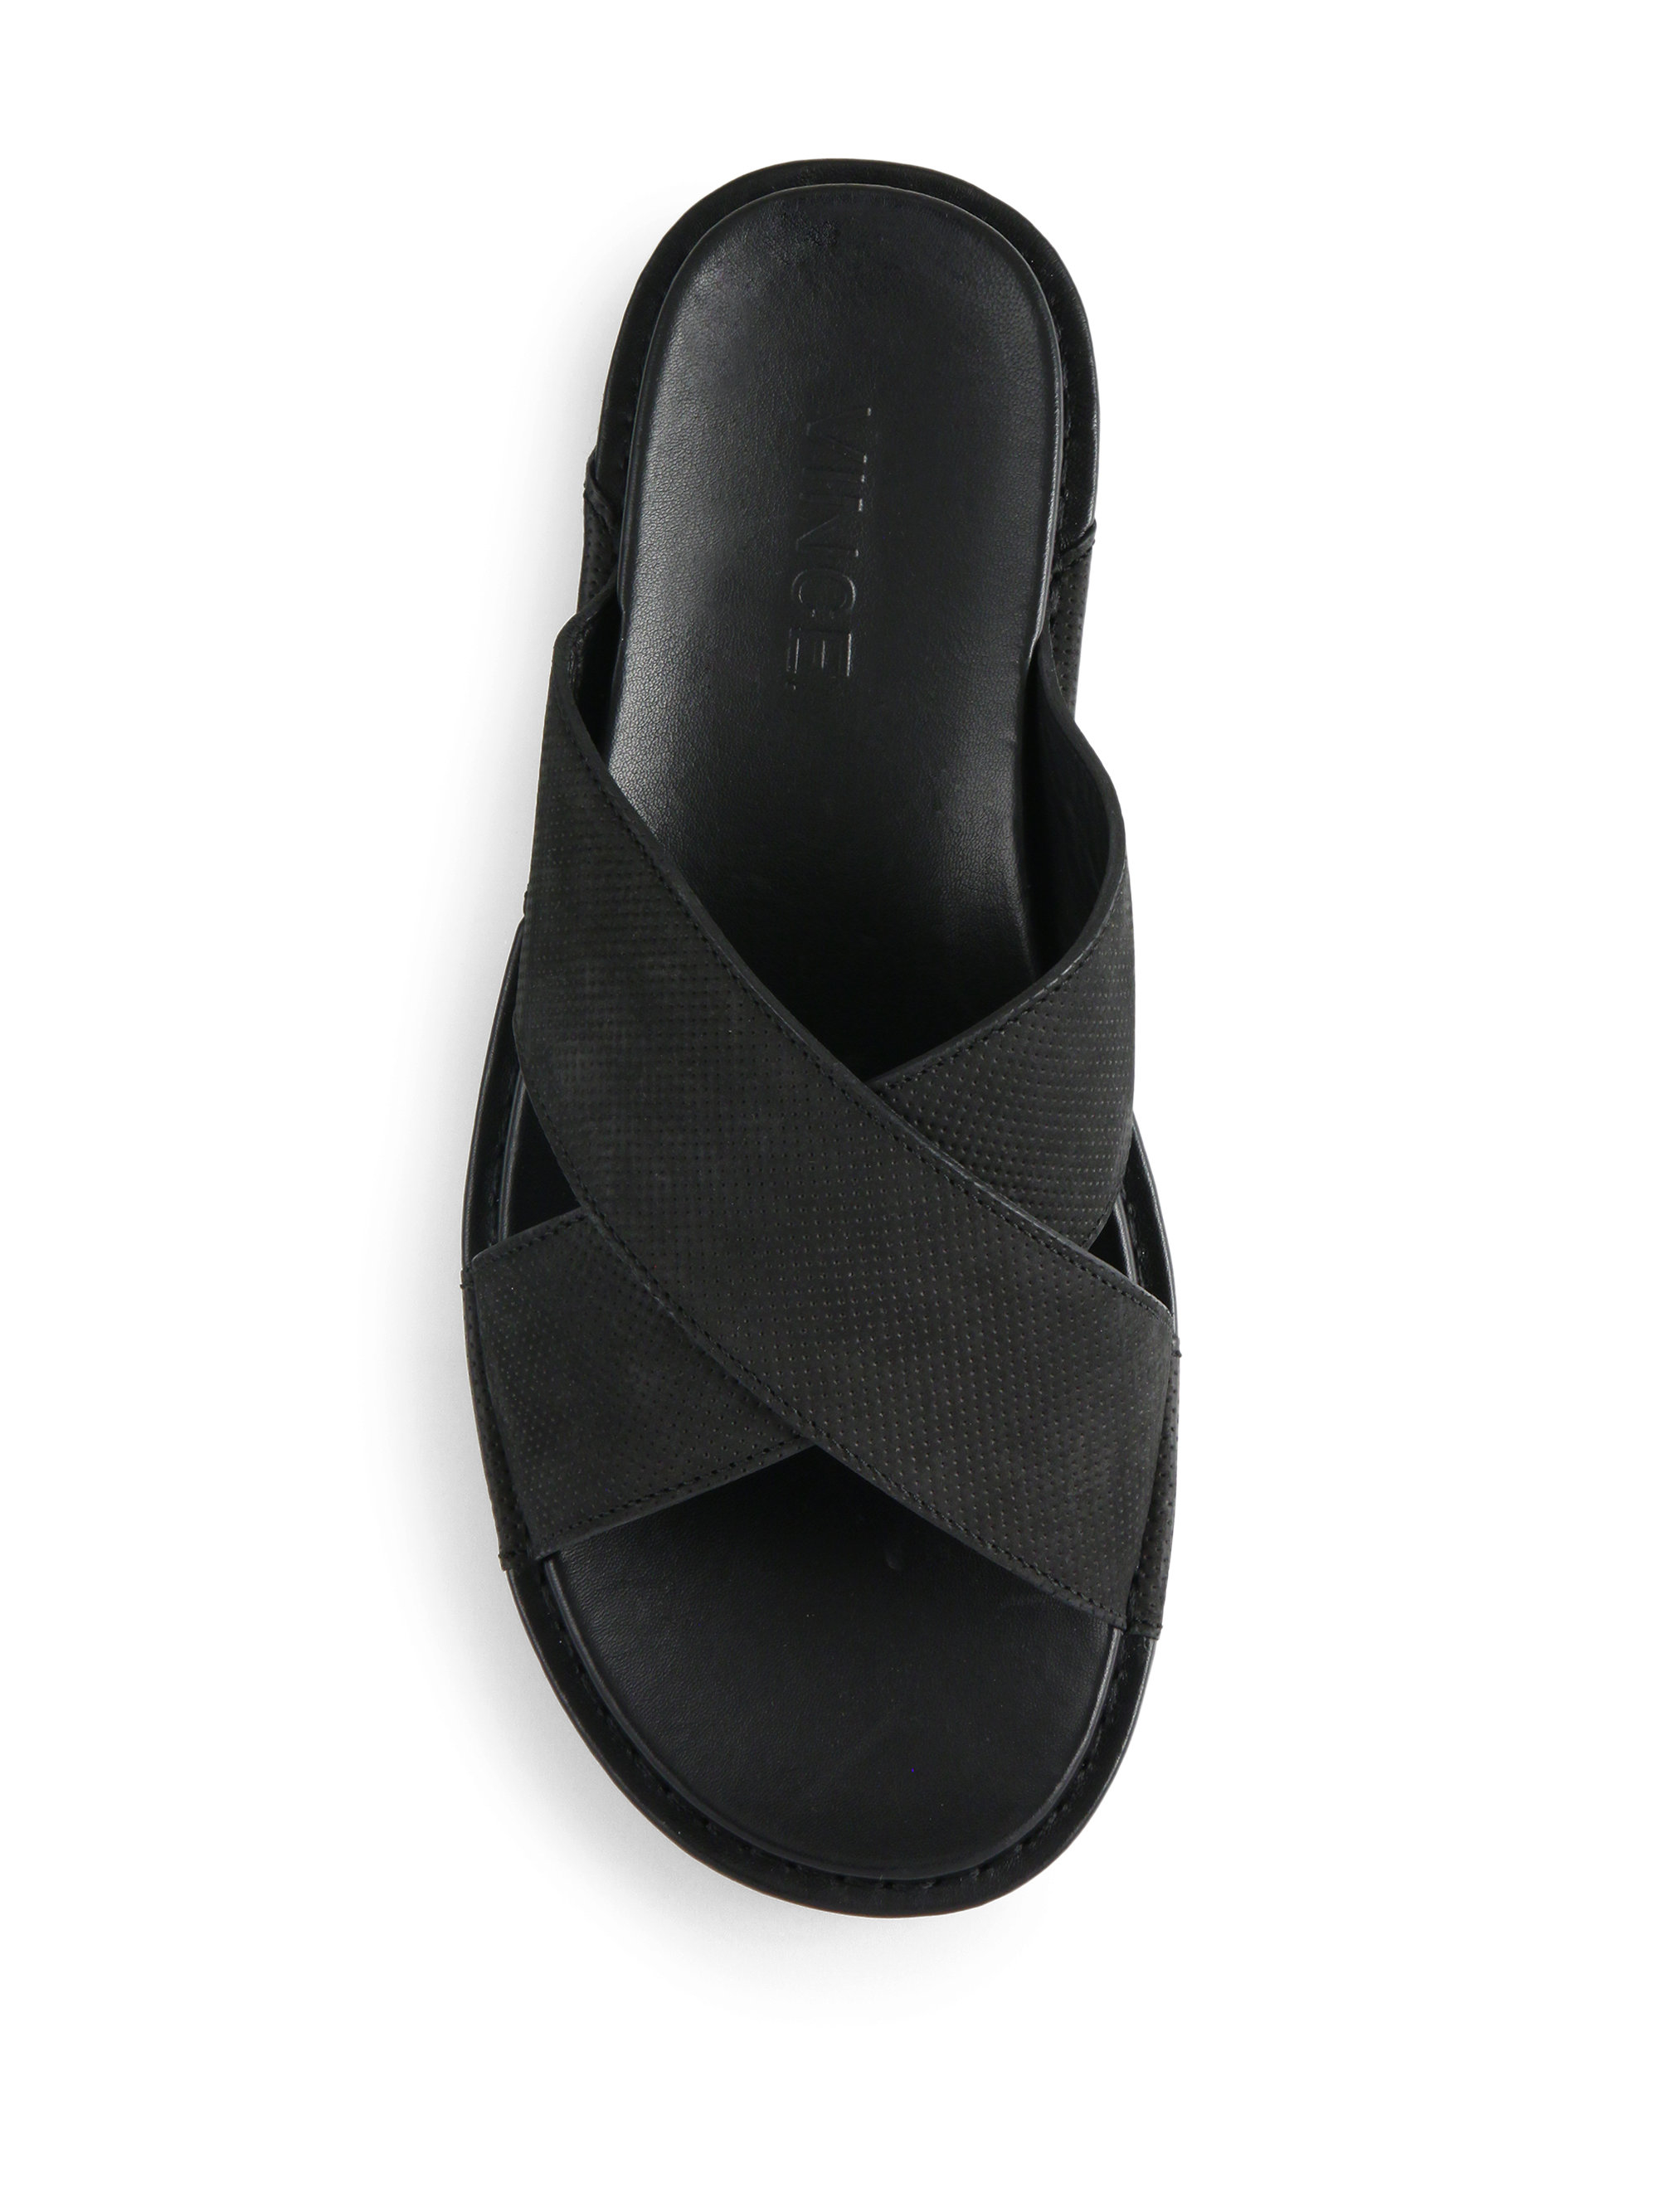 Lyst - Vince Weston Leather Crisscross Slide Sandals in Black for Men